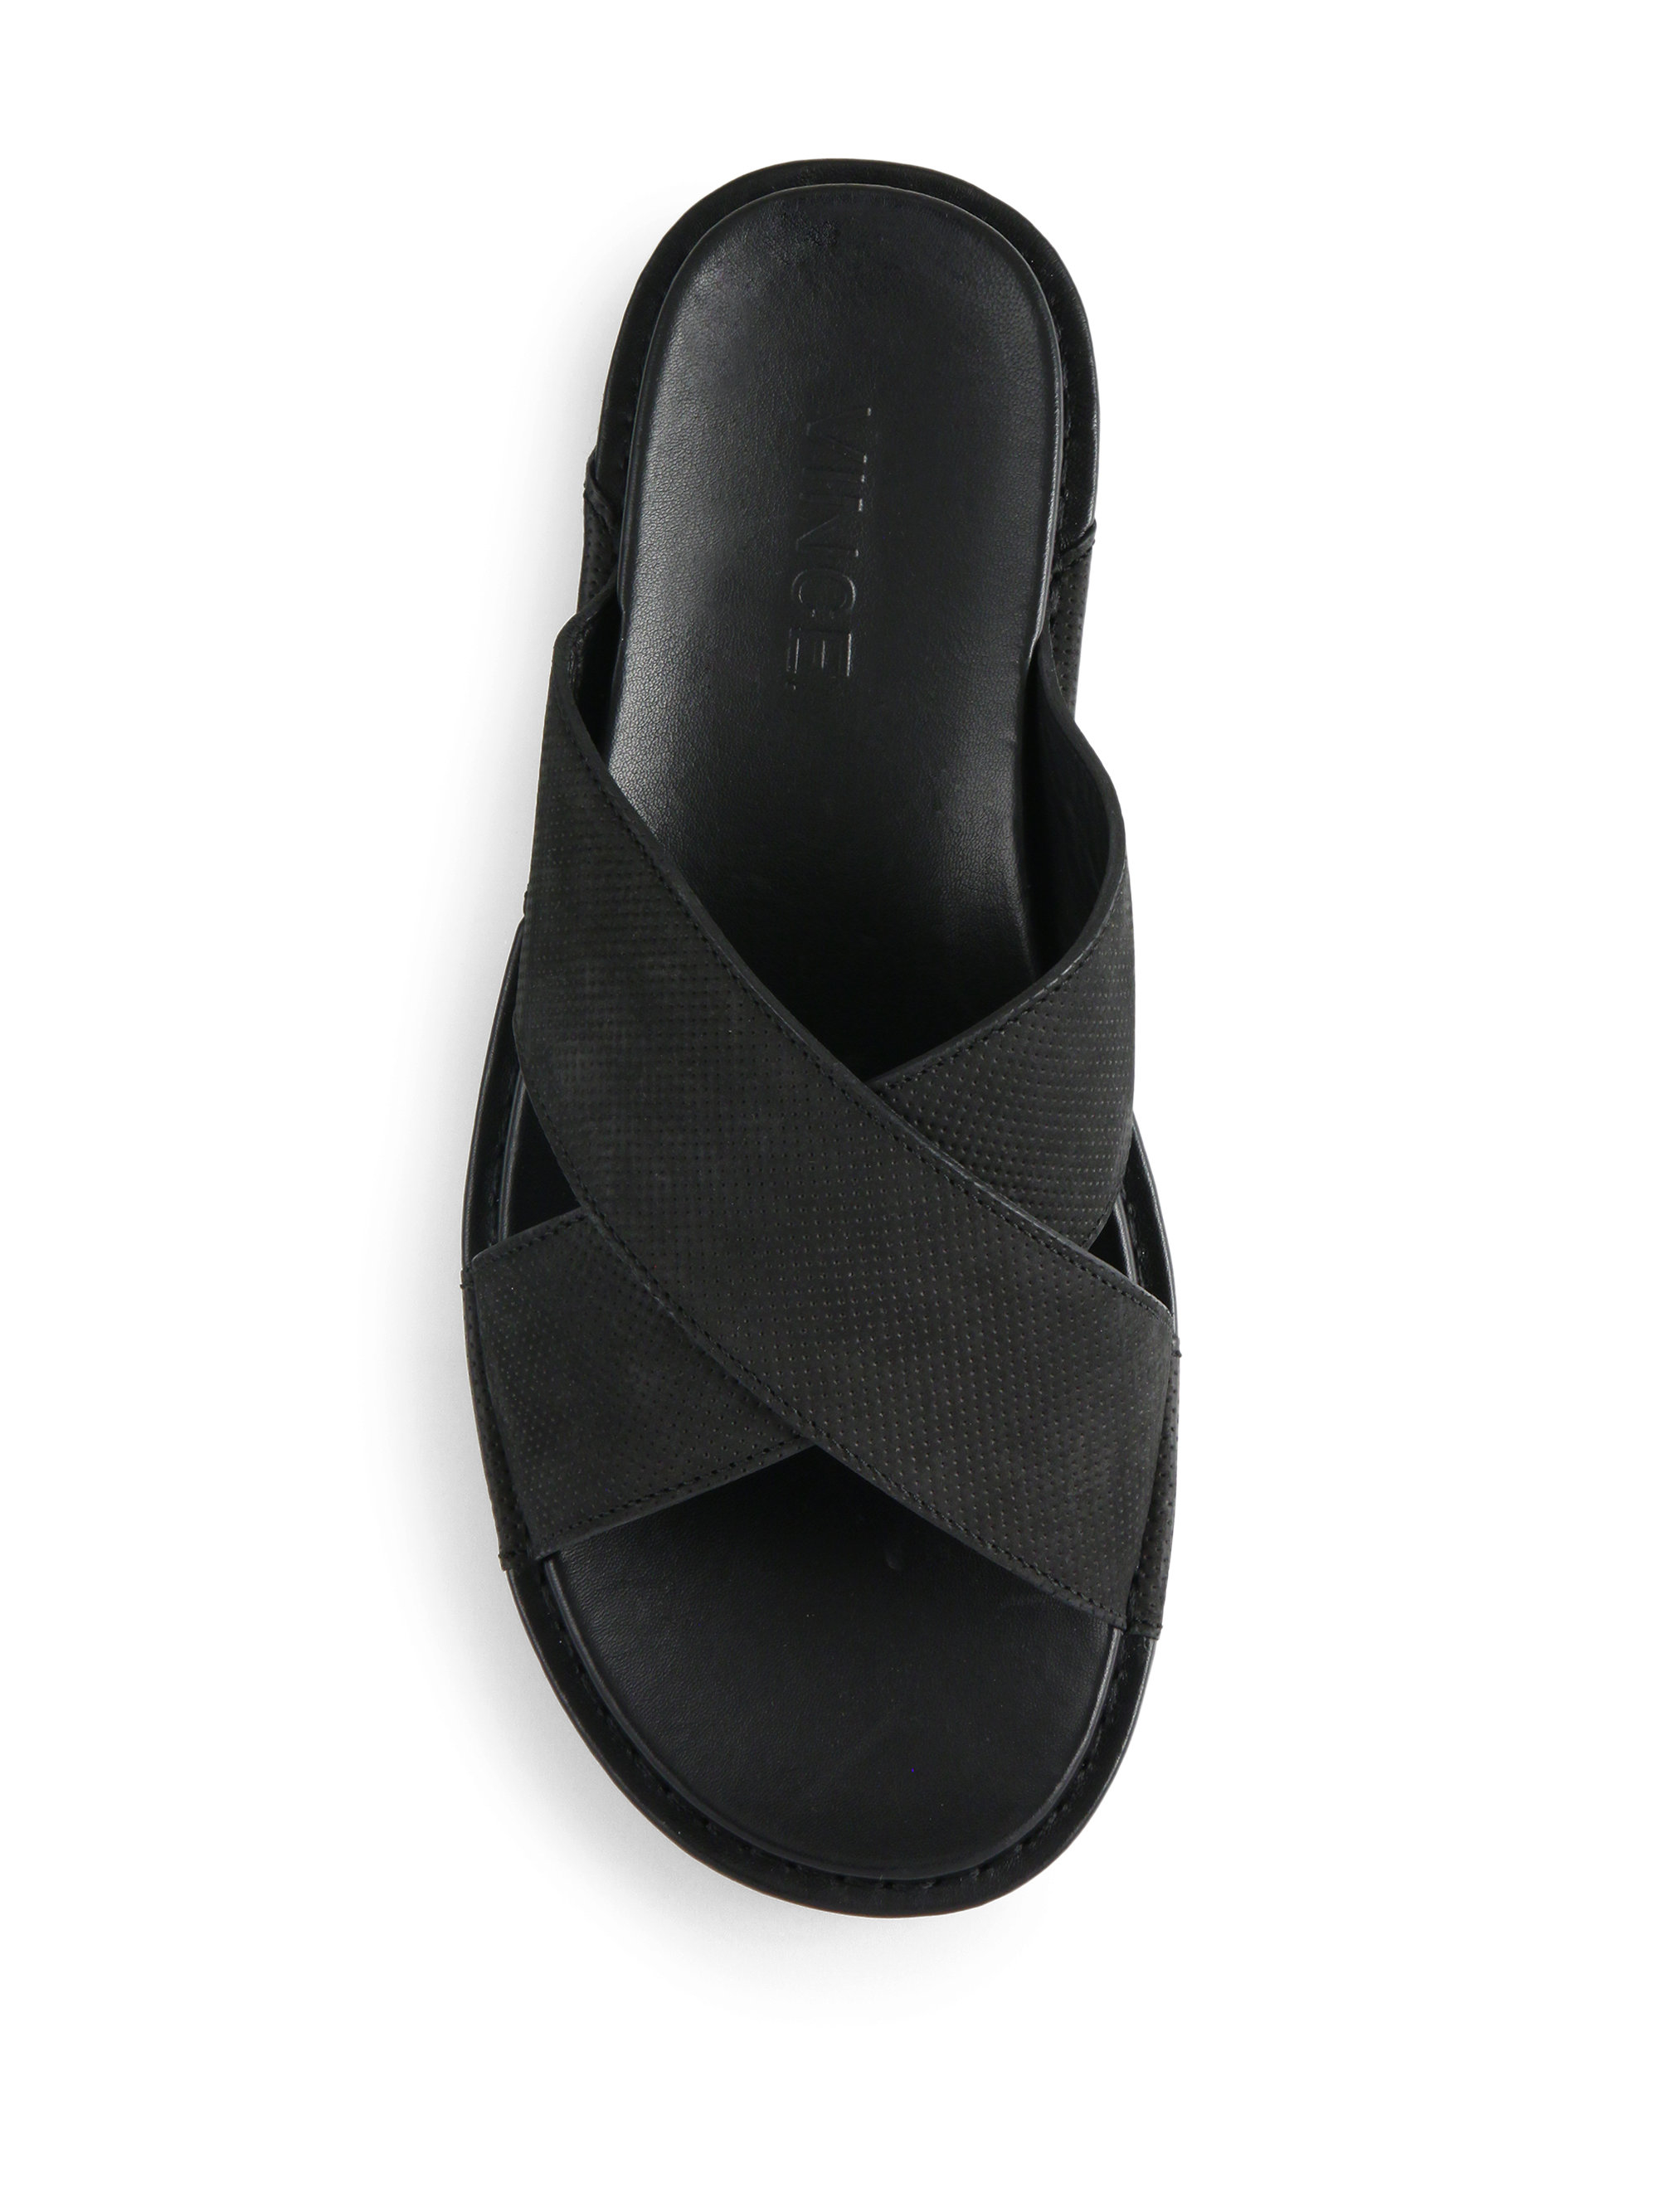 Lyst - Vince Weston Leather Crisscross Slide Sandals in Black for Men